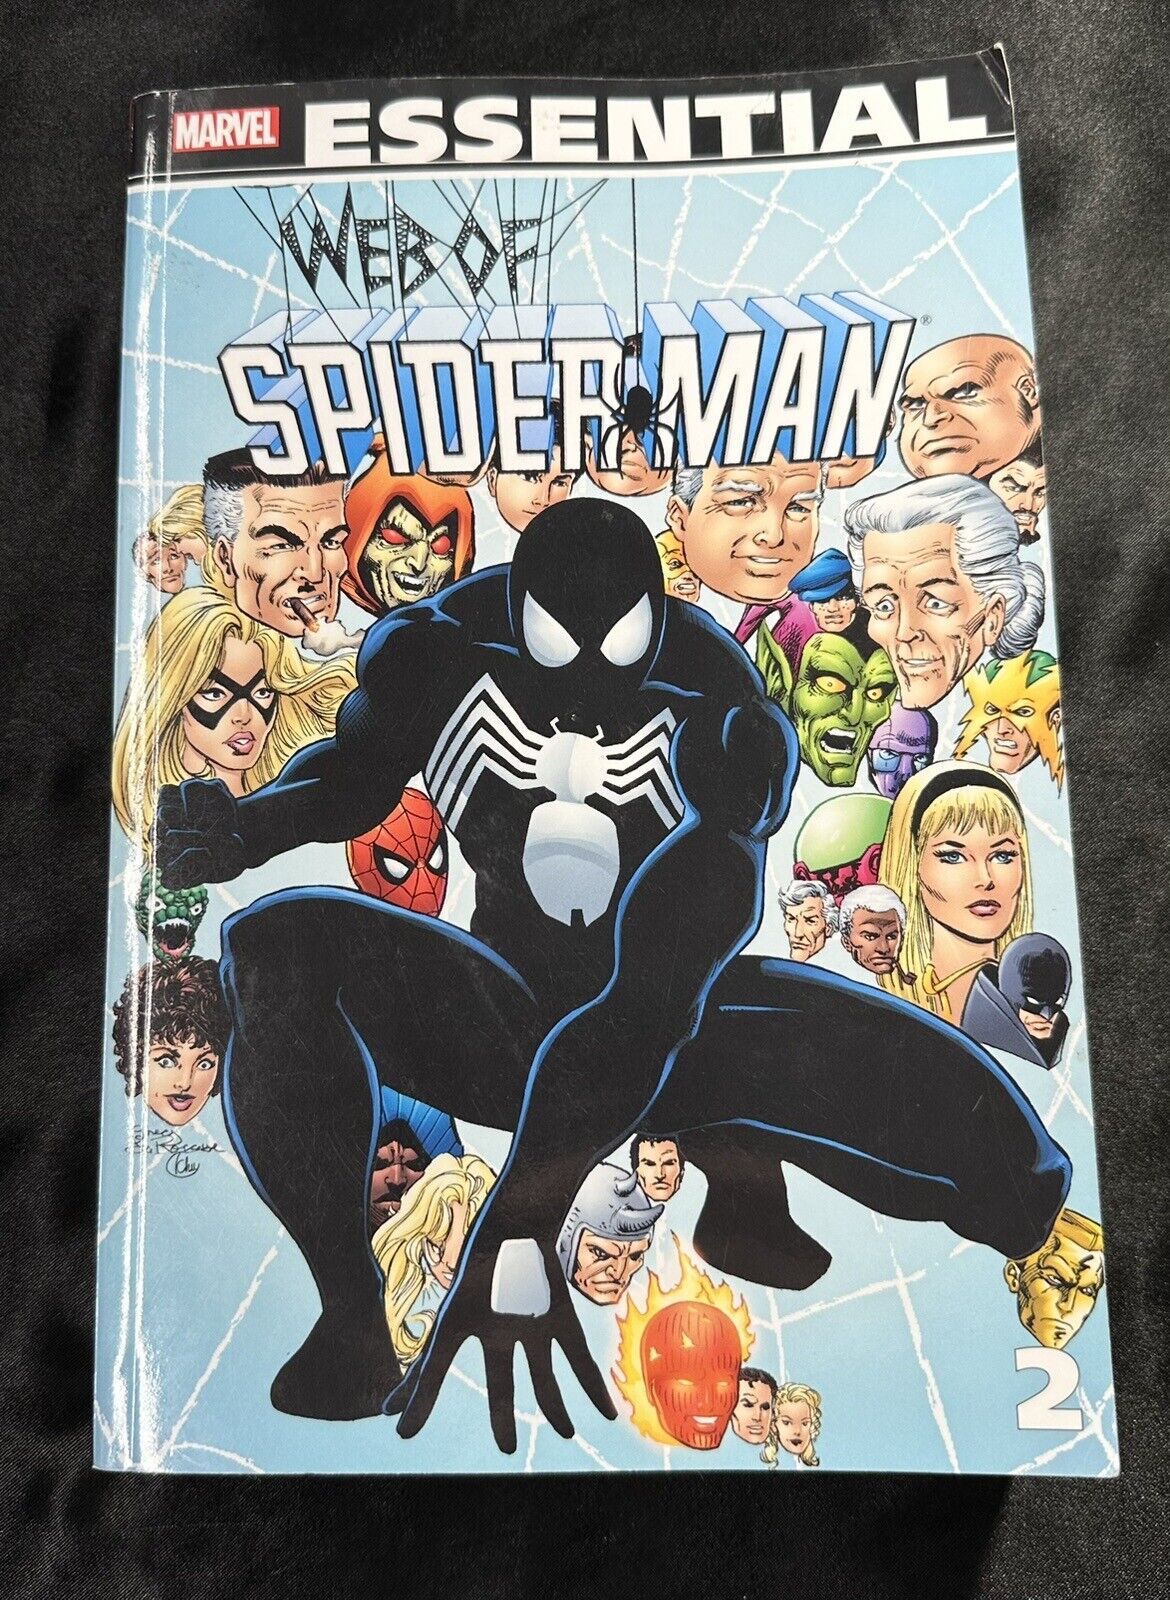 Essential Web of Spider-Man - Vol. 2 (Essen... by Mike Zeck Paperback / softback